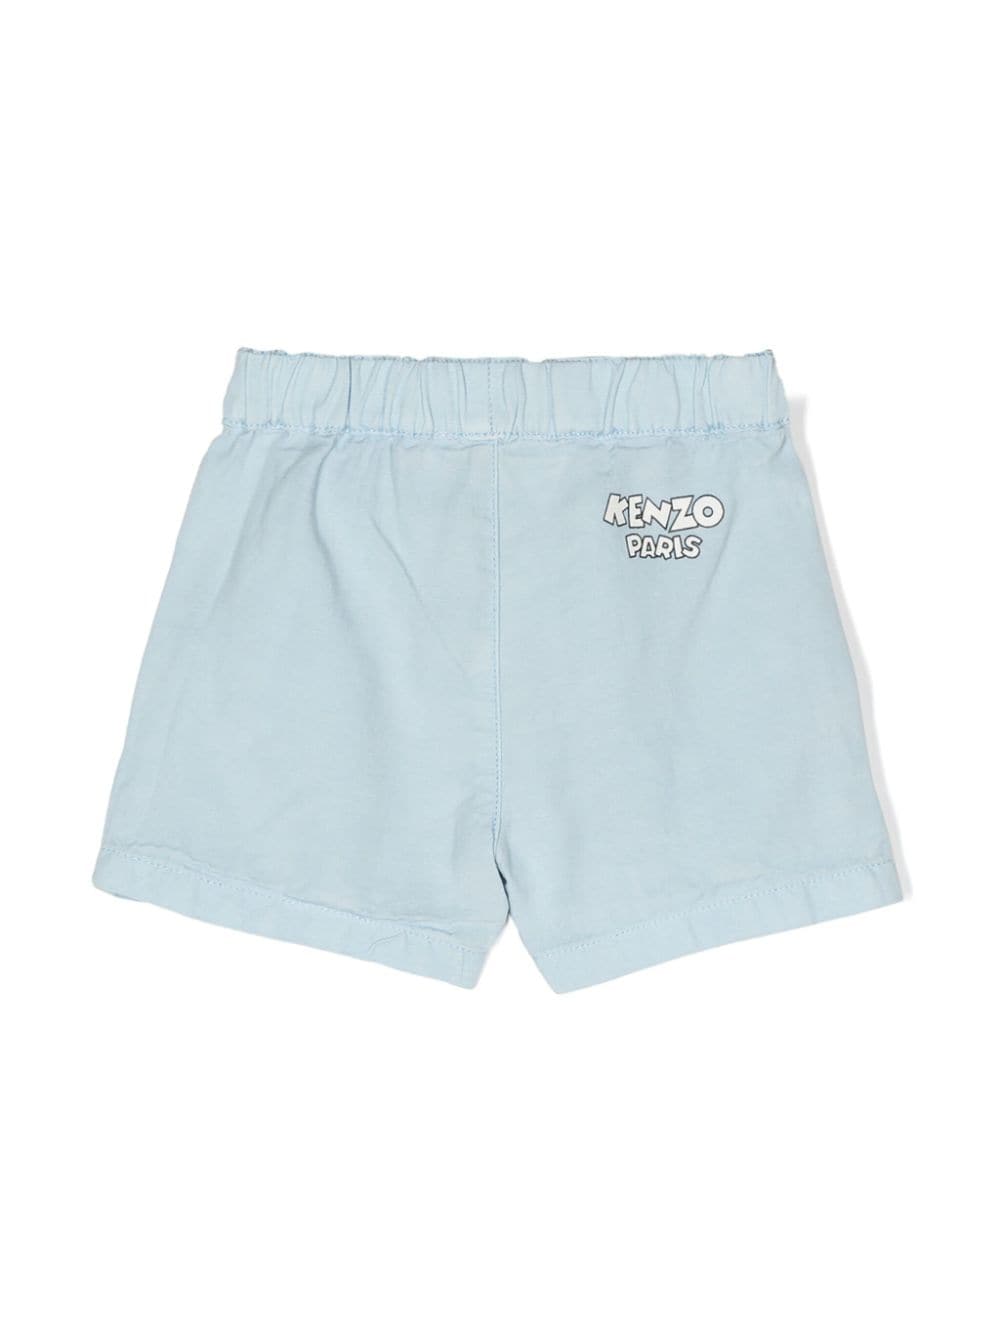 Shorts in misto lyocell con logo stampato